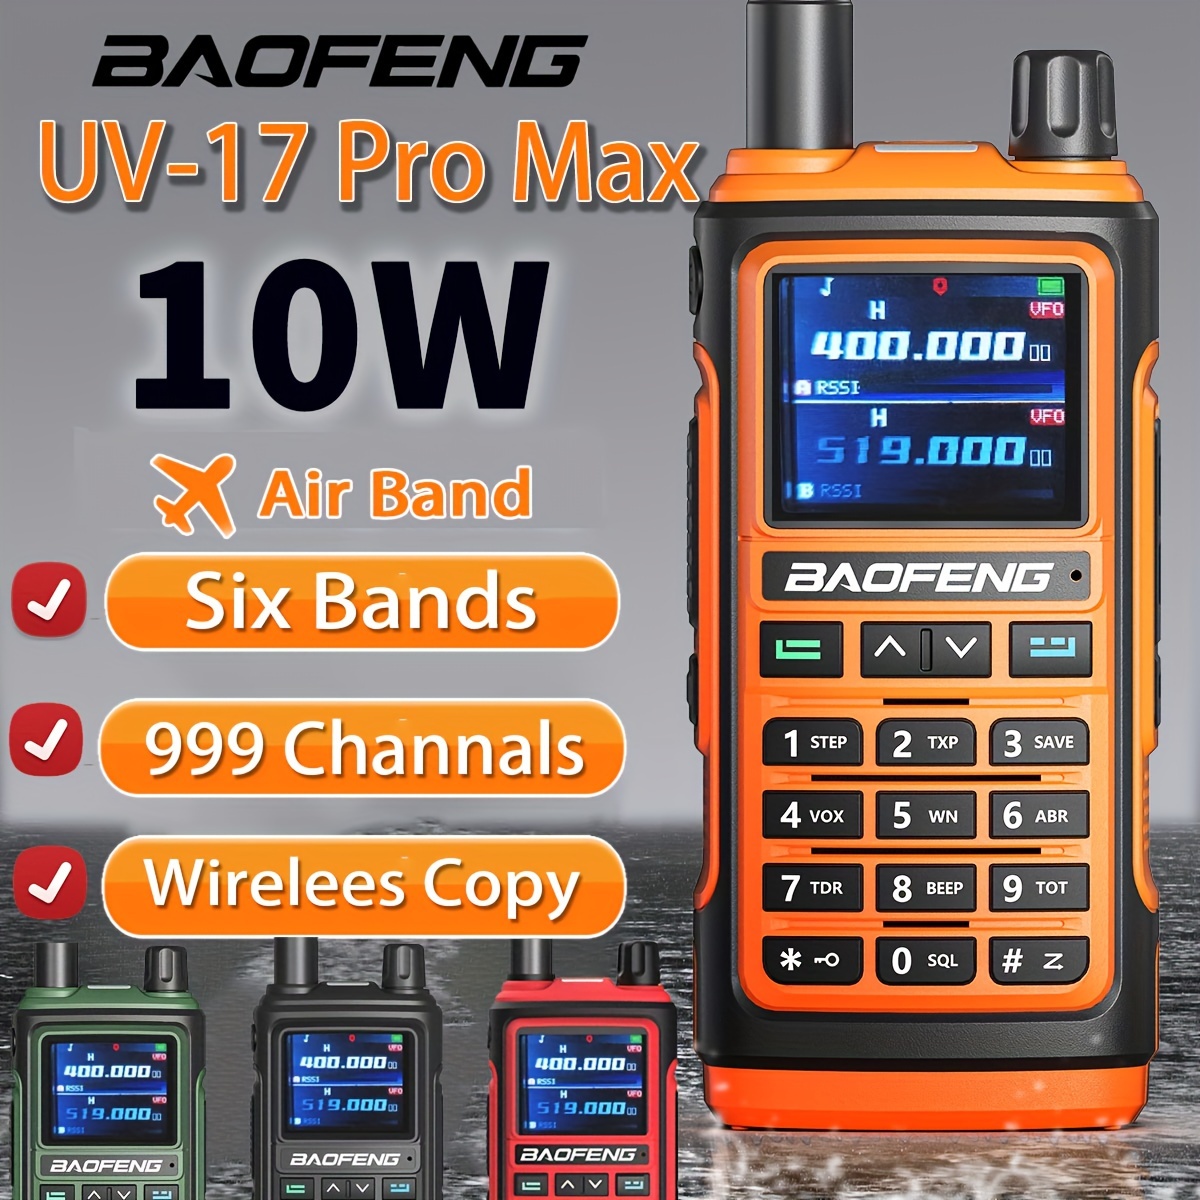 BAOFENG - Talkie Walkie UV-3R Dual Band VHF/UHF - Safe Zone Airsoft